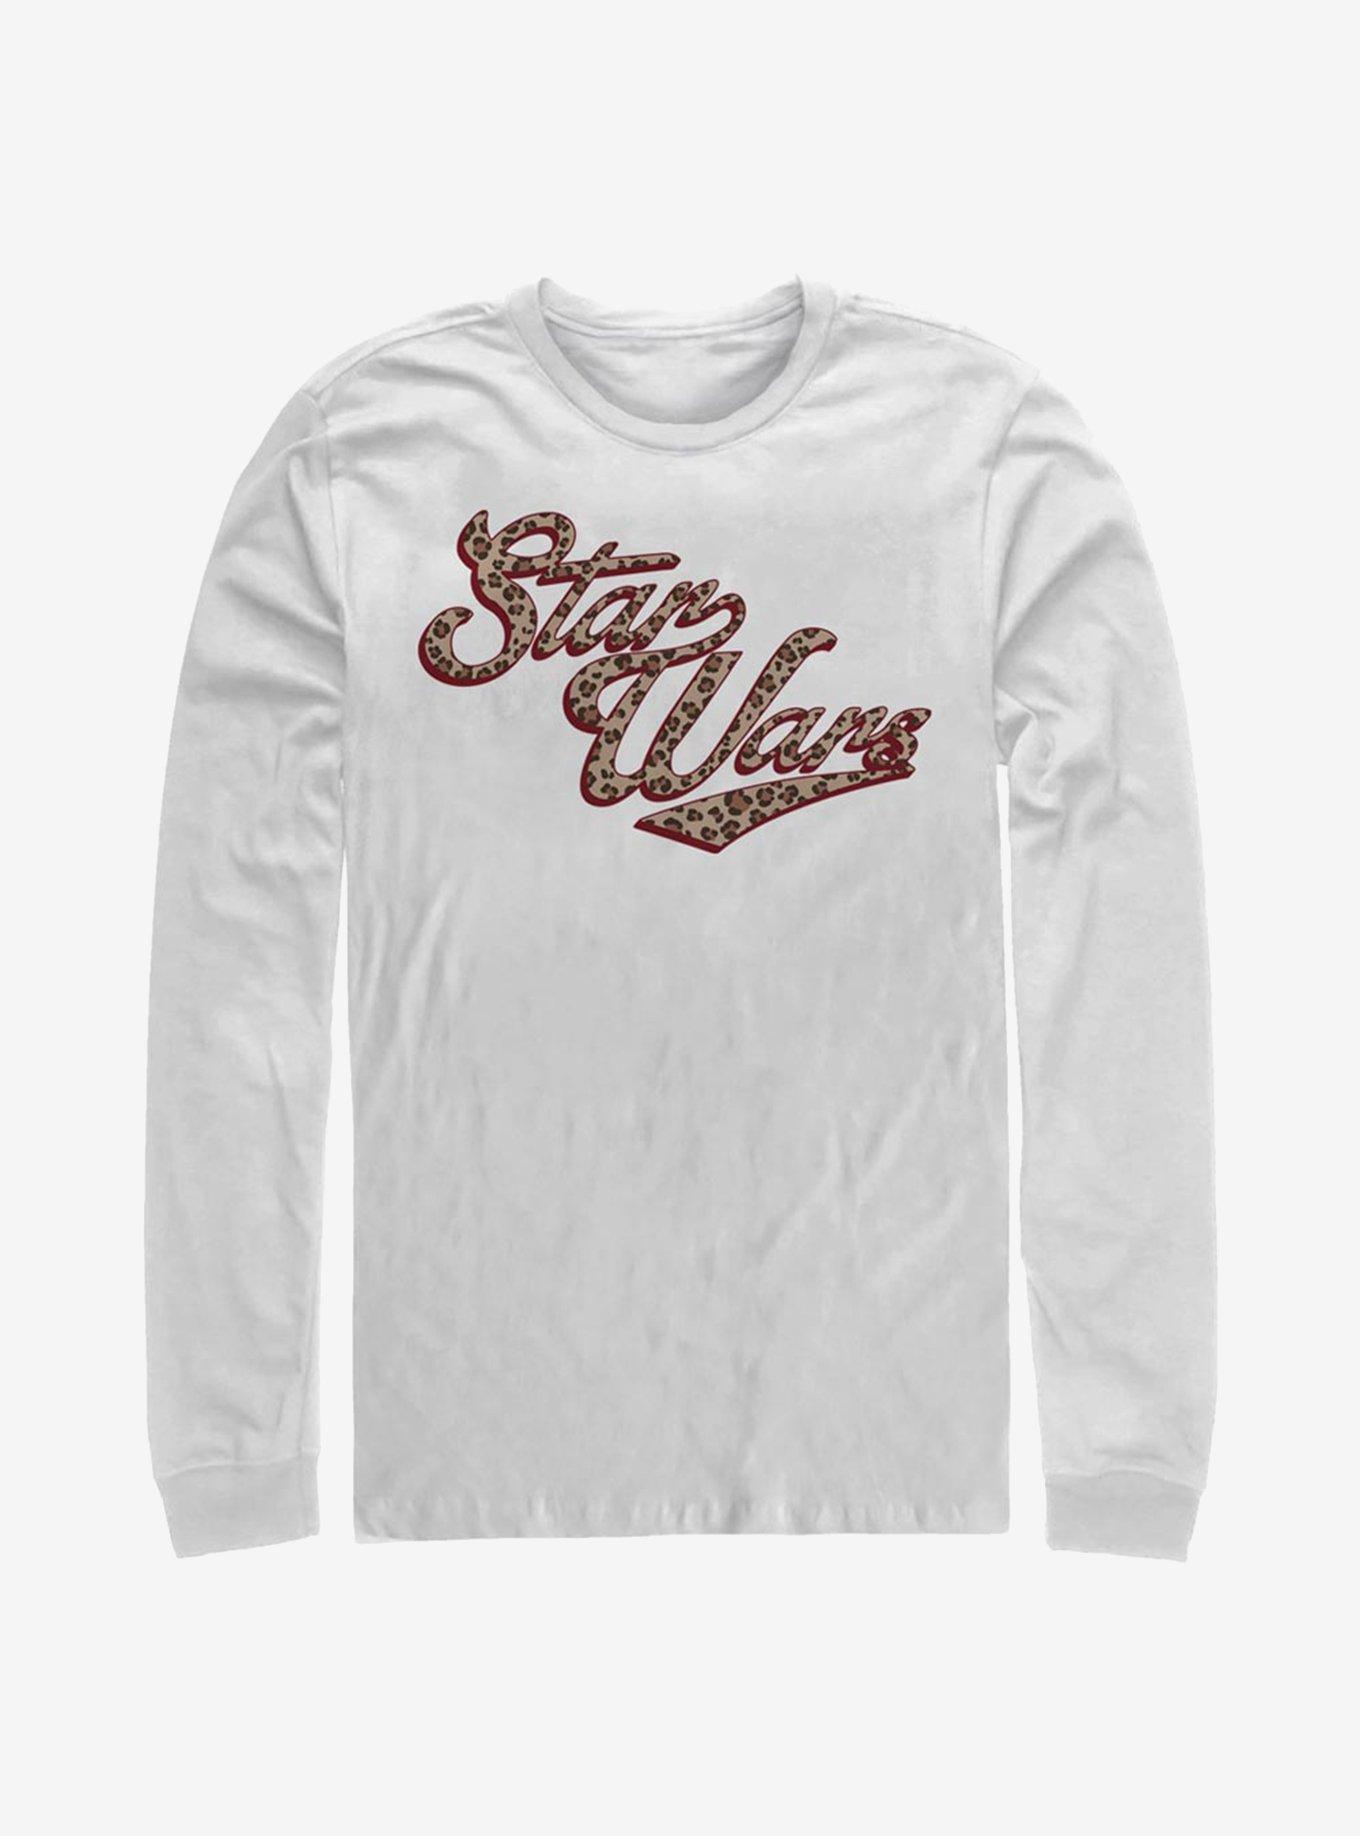 Star Wars Cheetah Long-Sleeve T-Shirt, WHITE, hi-res